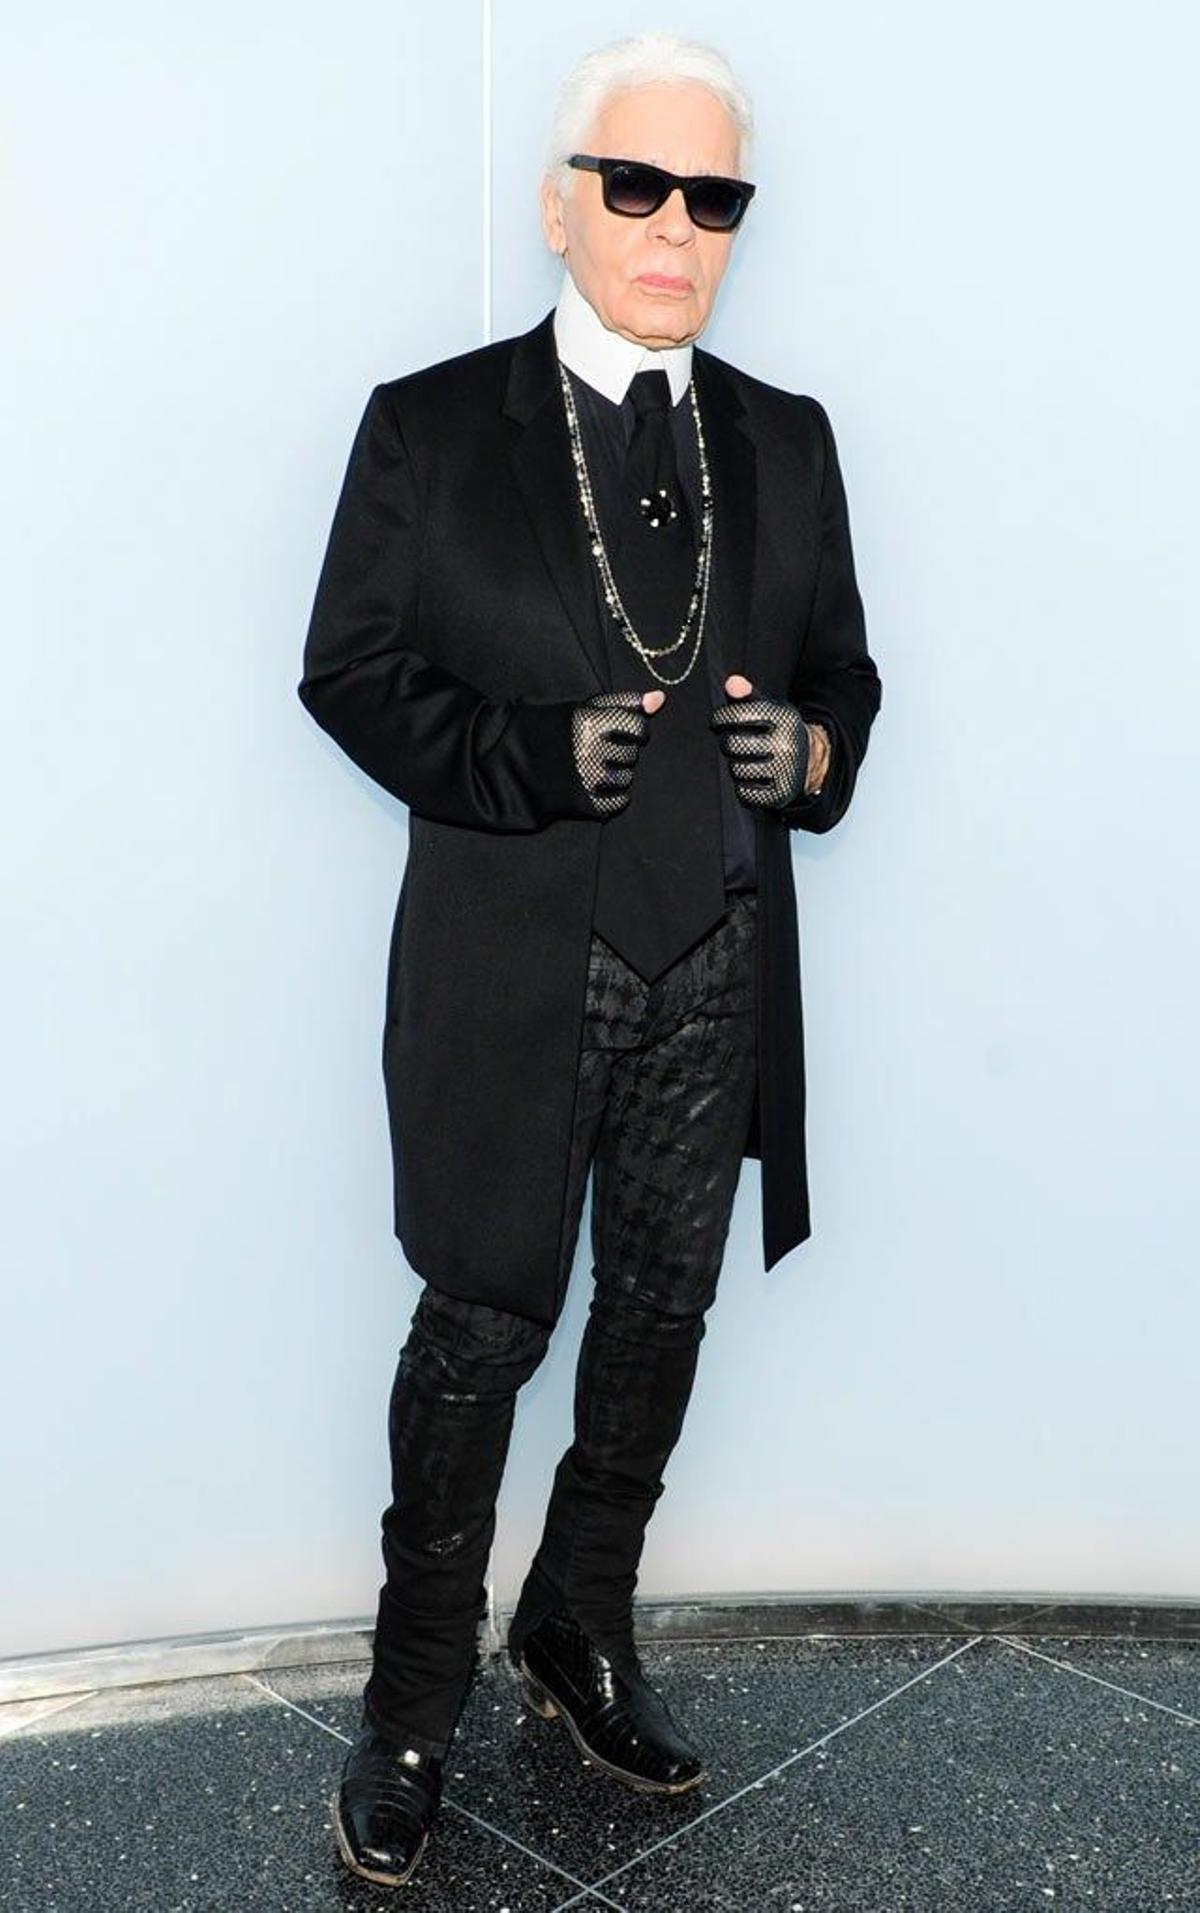 Karl Lagerfeld, en la fiesta de Louis Vuitton celebrada en el MoMA